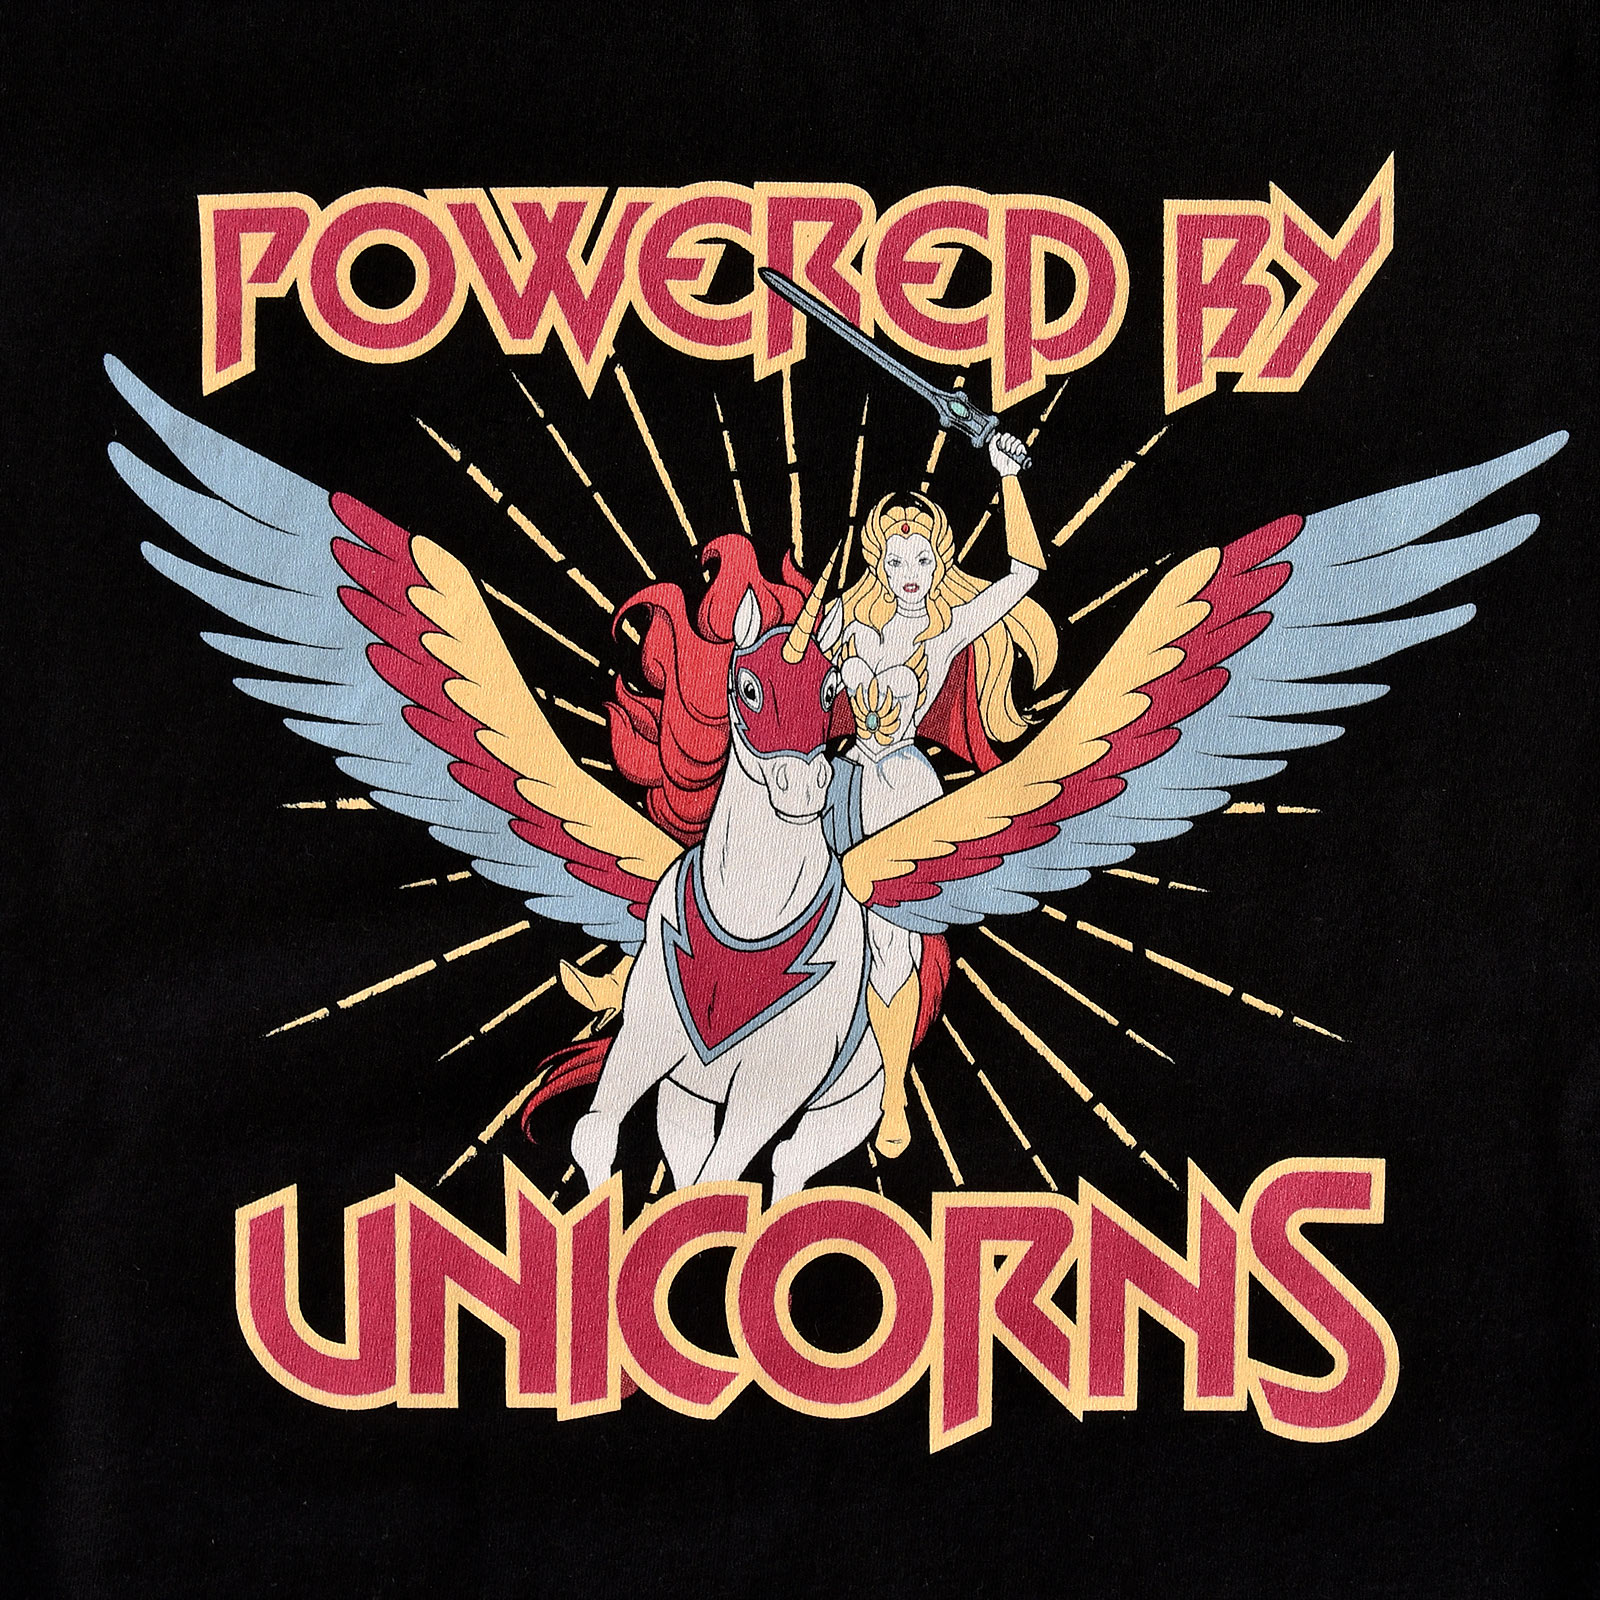 Masters of the Universe - She-Ra Powered by Unicorns Women's T-Shirt